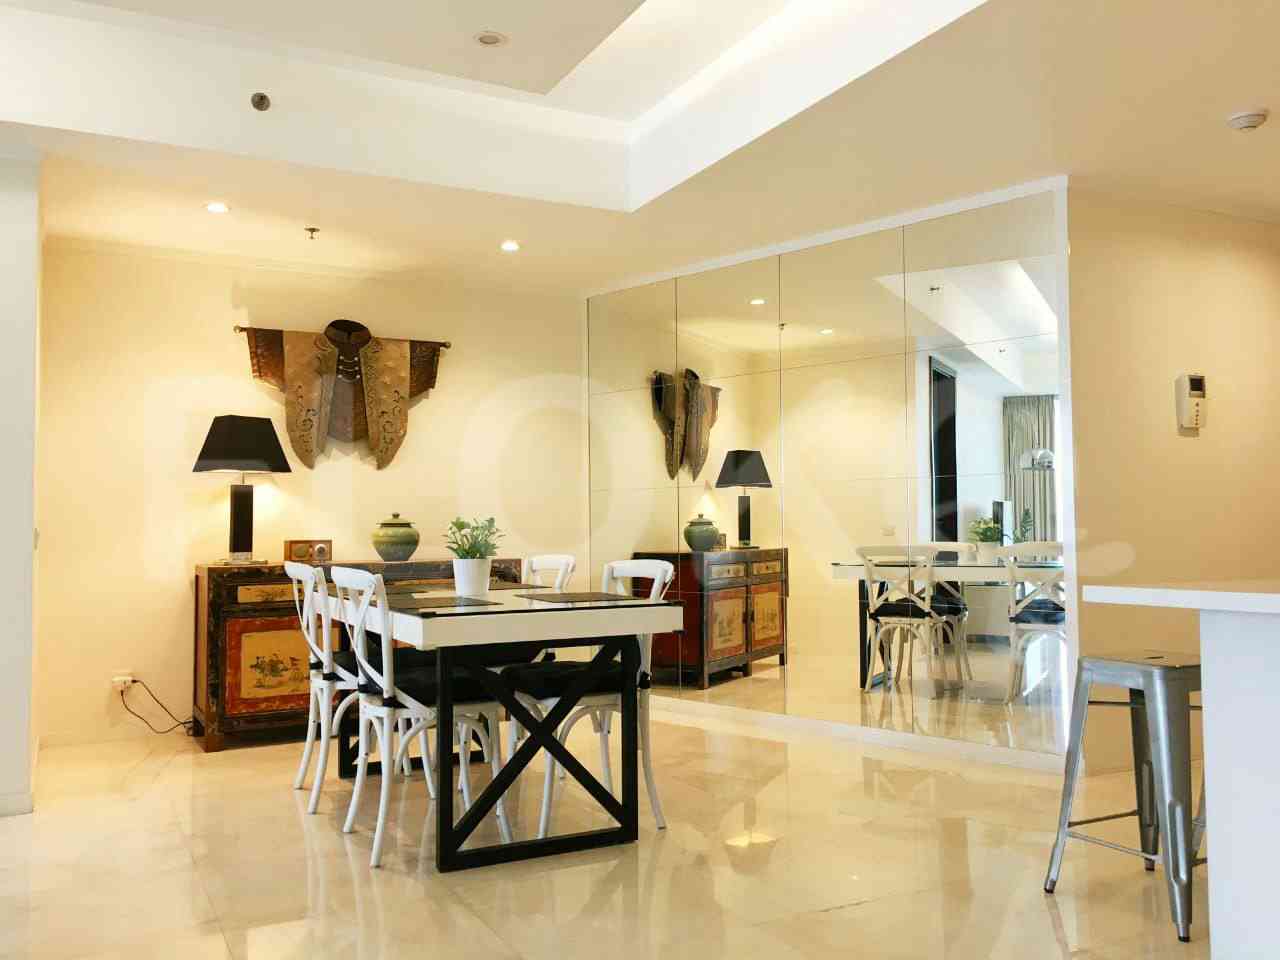 3 Bedroom on 20th Floor for Rent in Kemang Village Residence - fke21a 7